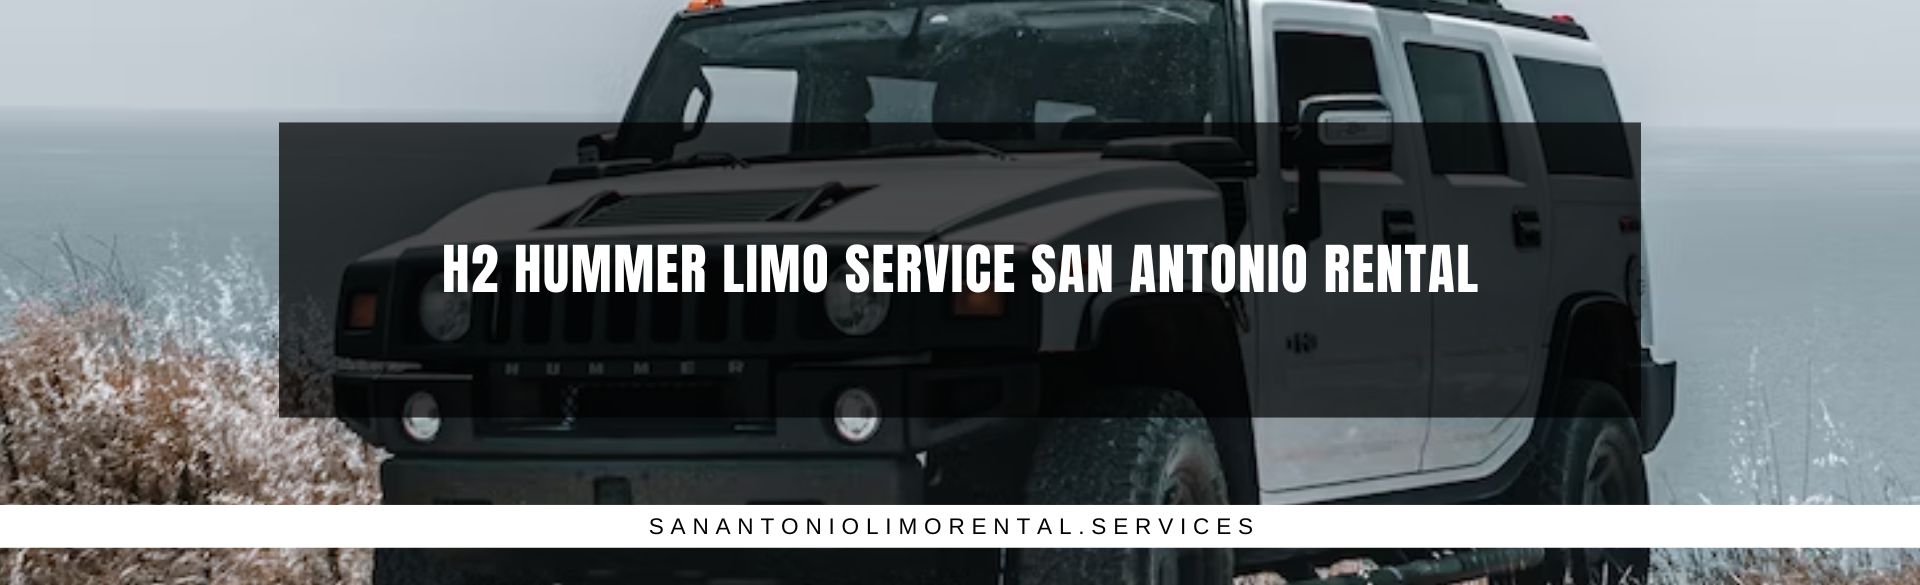 H2 Hummer Limo Service San Antonio Rental